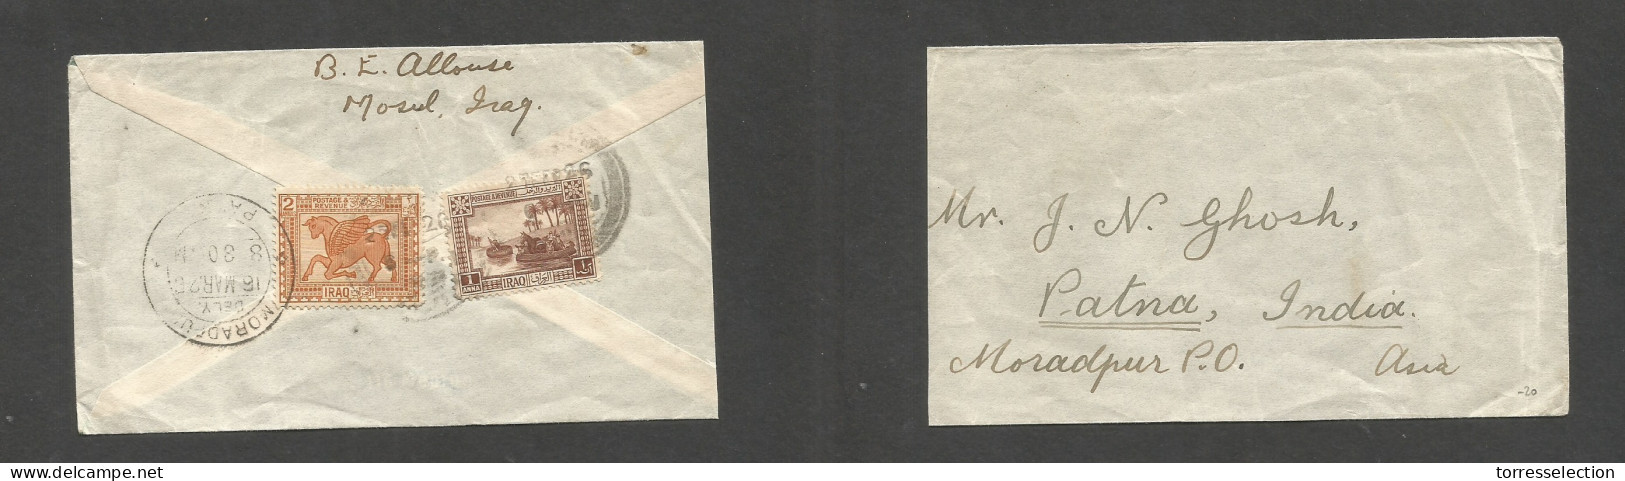 IRAQ. 1926 (16 March) Moradeul, Mosul - India, Patna. Reverse Multifkd Envelope At 3a Rate. SALE. - Irak